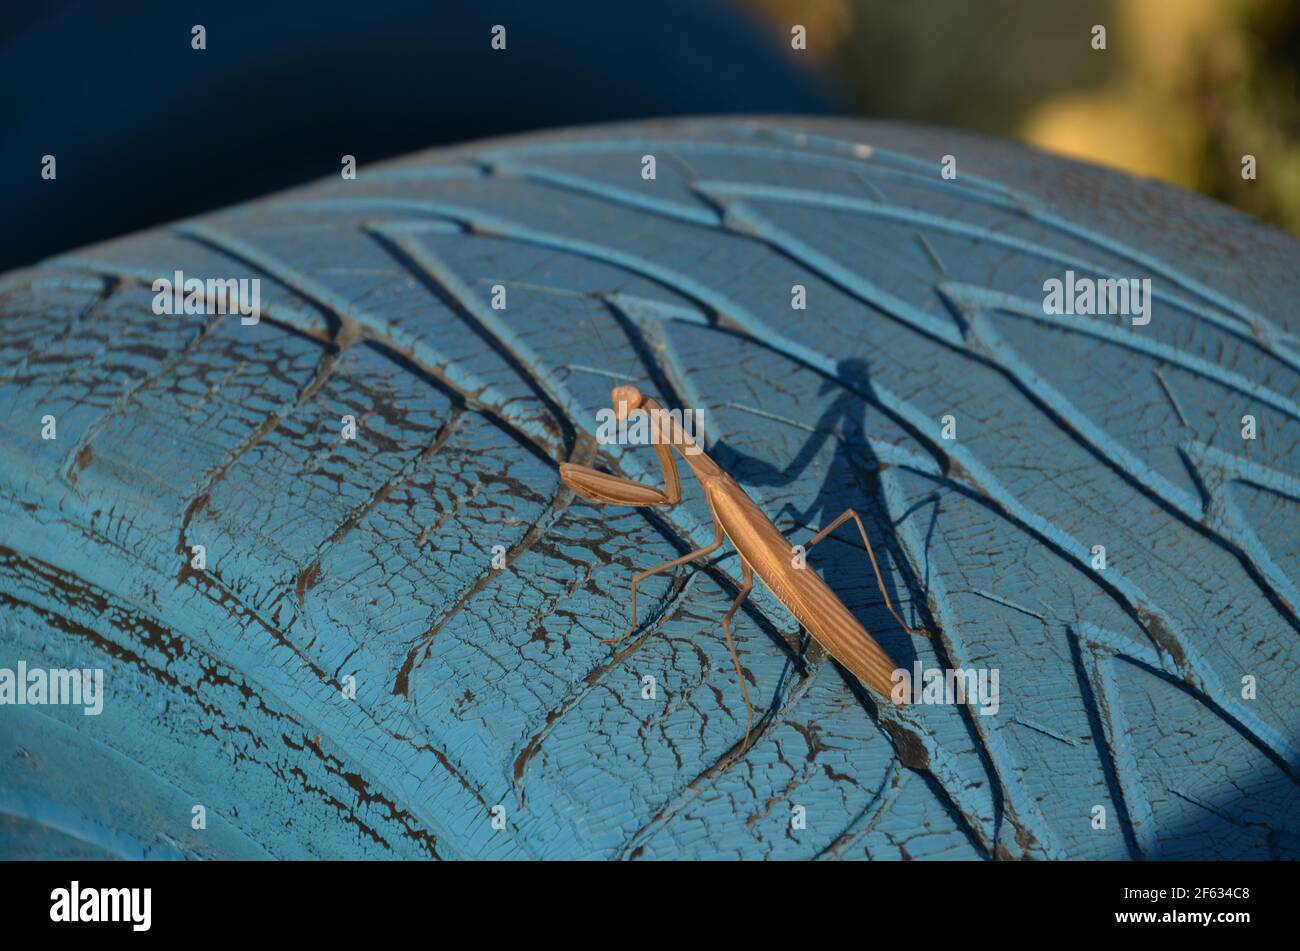 praying mantis on a blue wheel Stock Photo